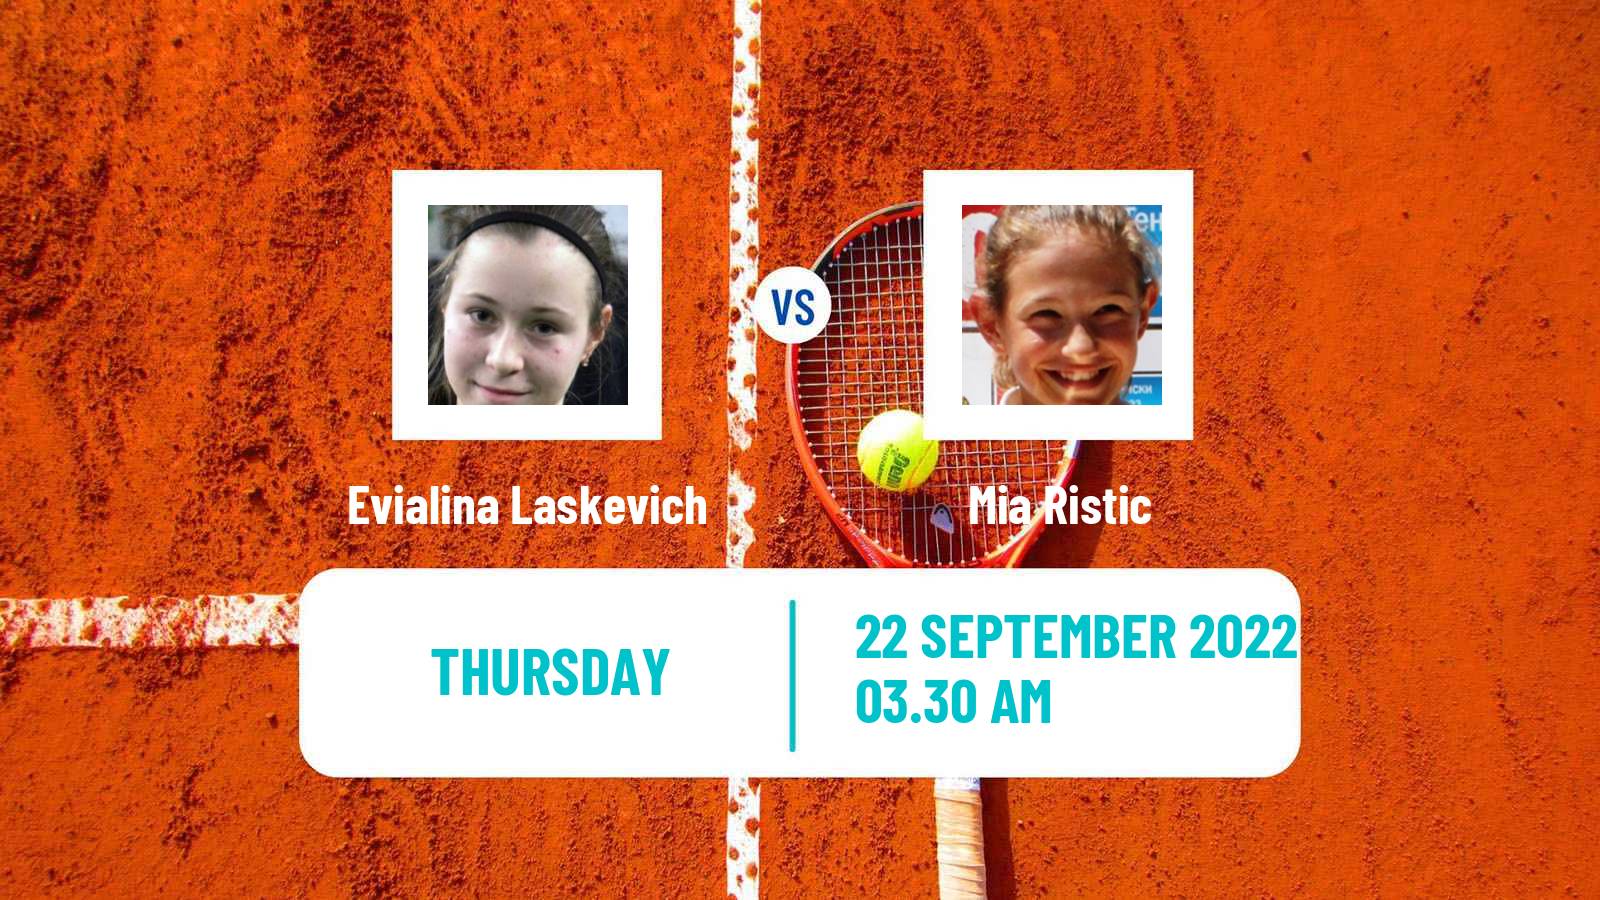 Tennis ITF Tournaments Evialina Laskevich - Mia Ristic